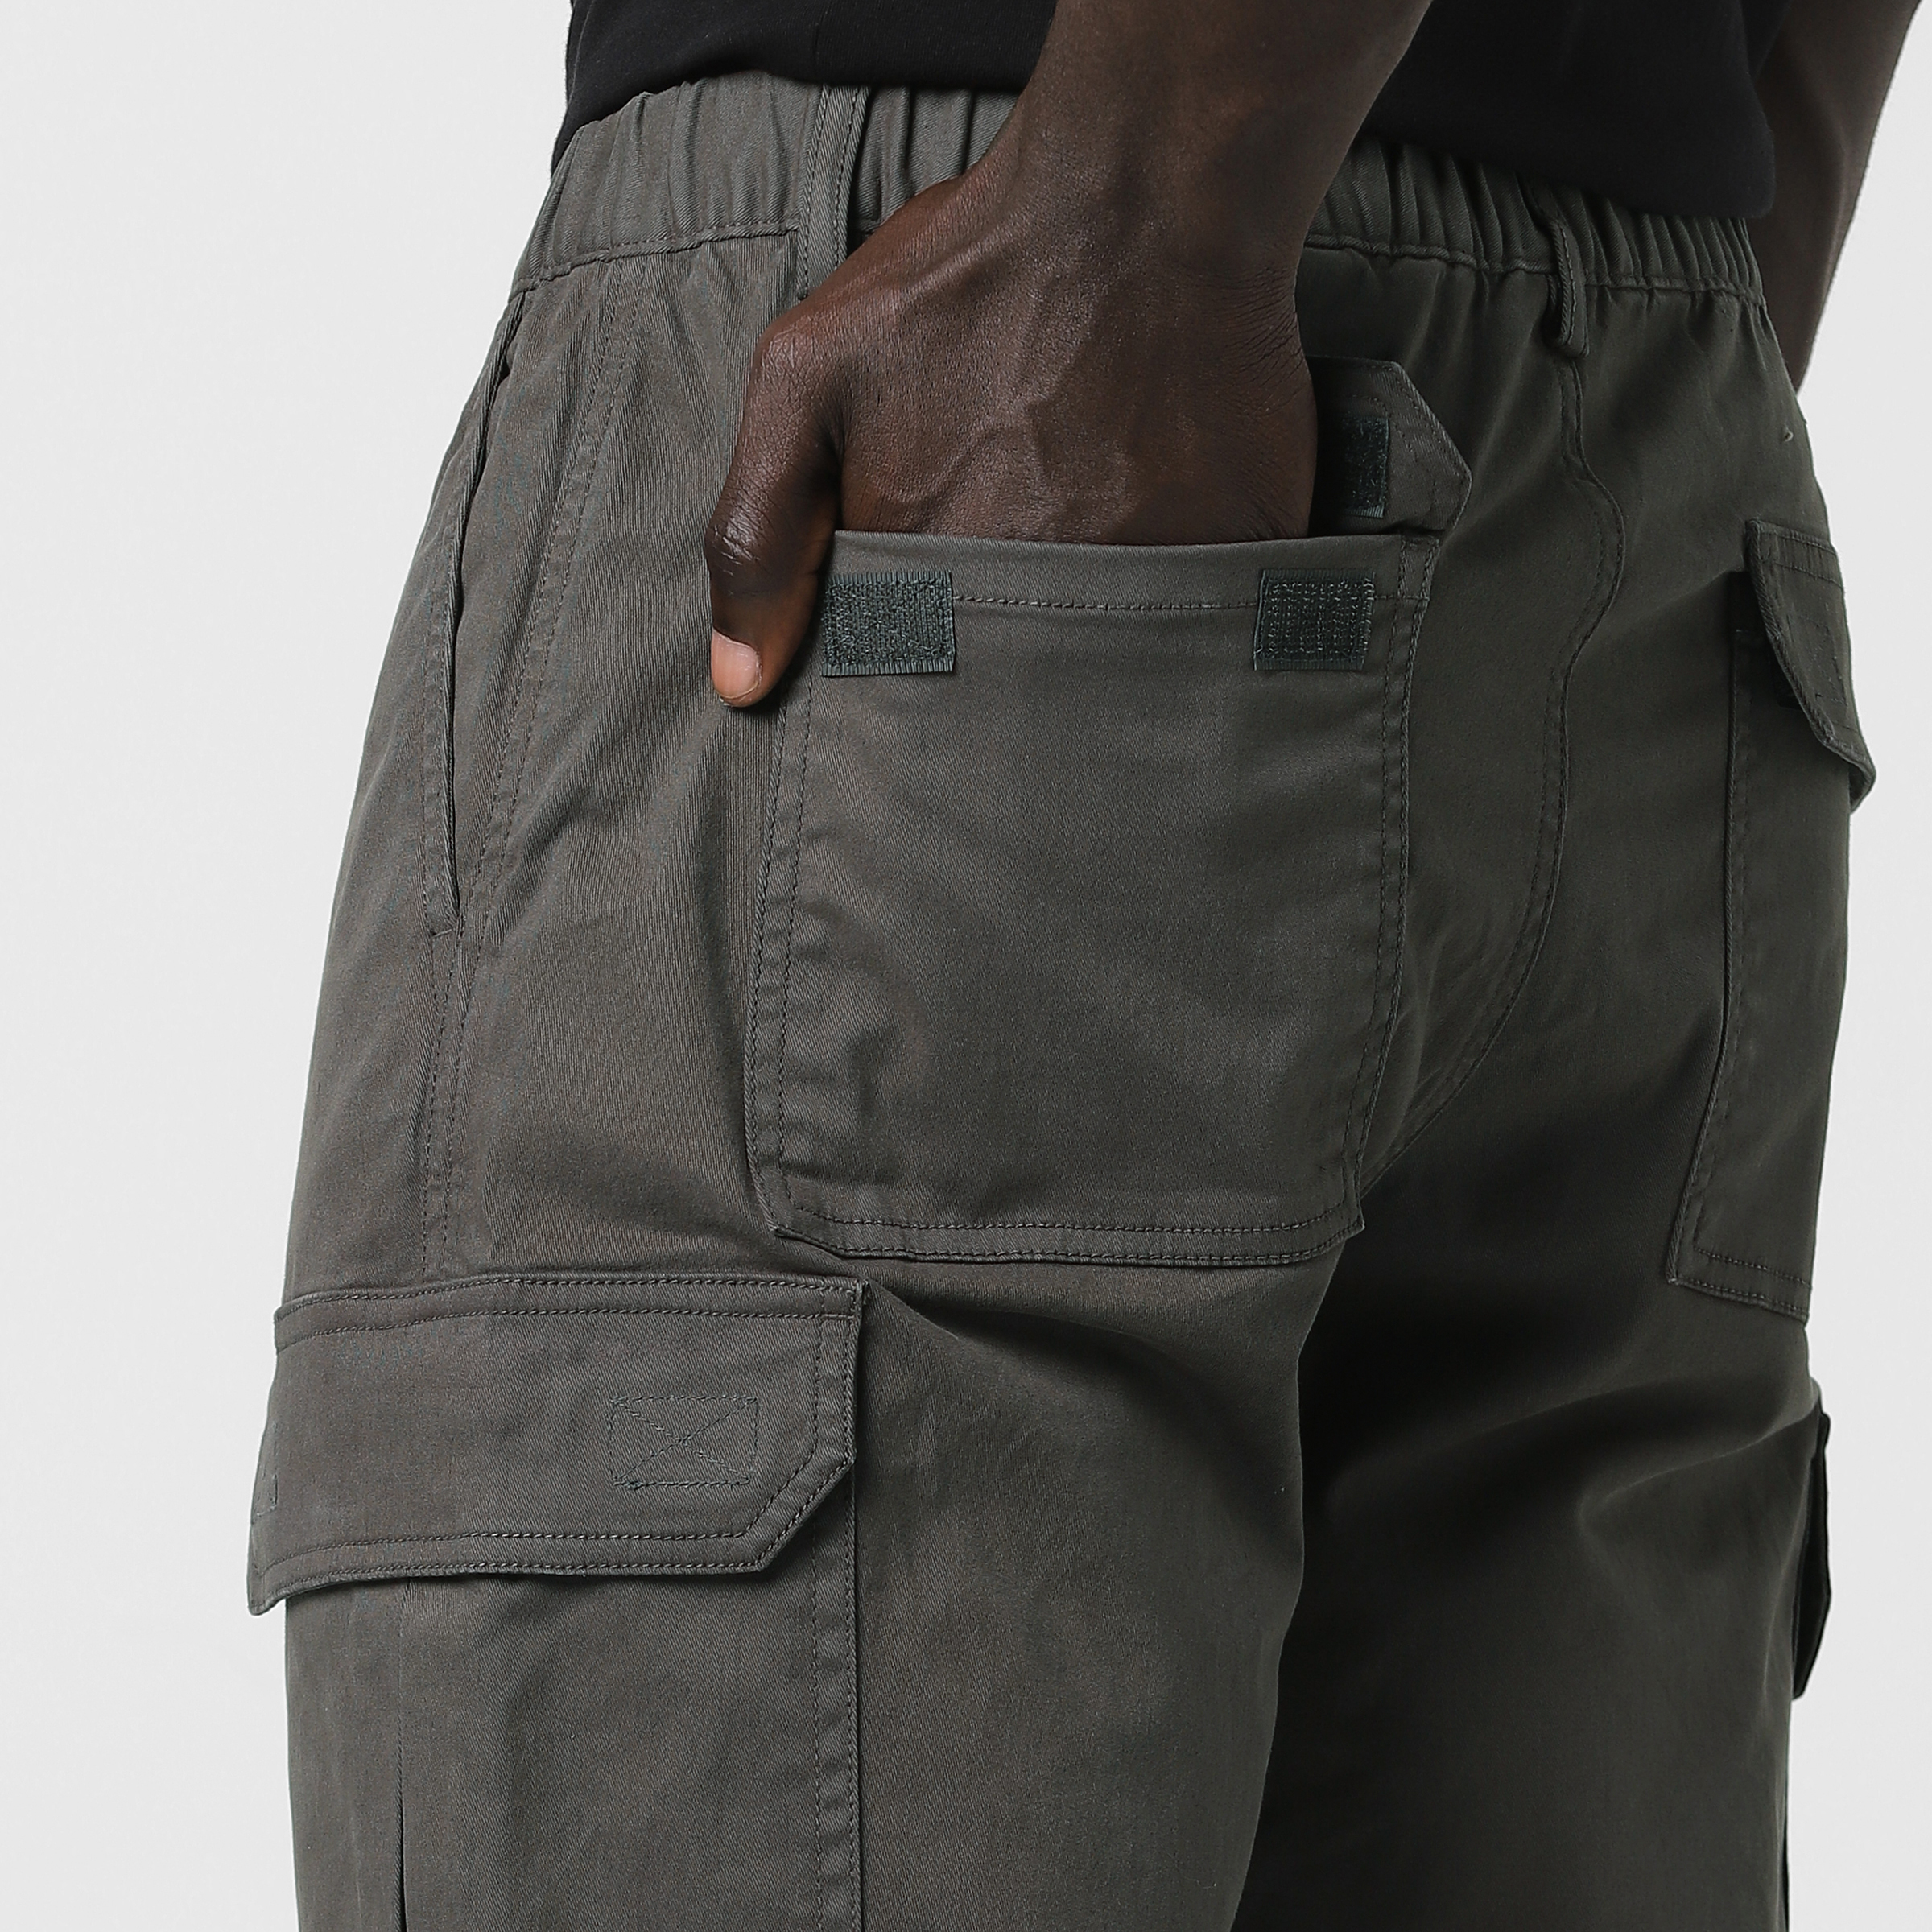 Stretch Cargo Pant Dark Grey close up back velcro pockets